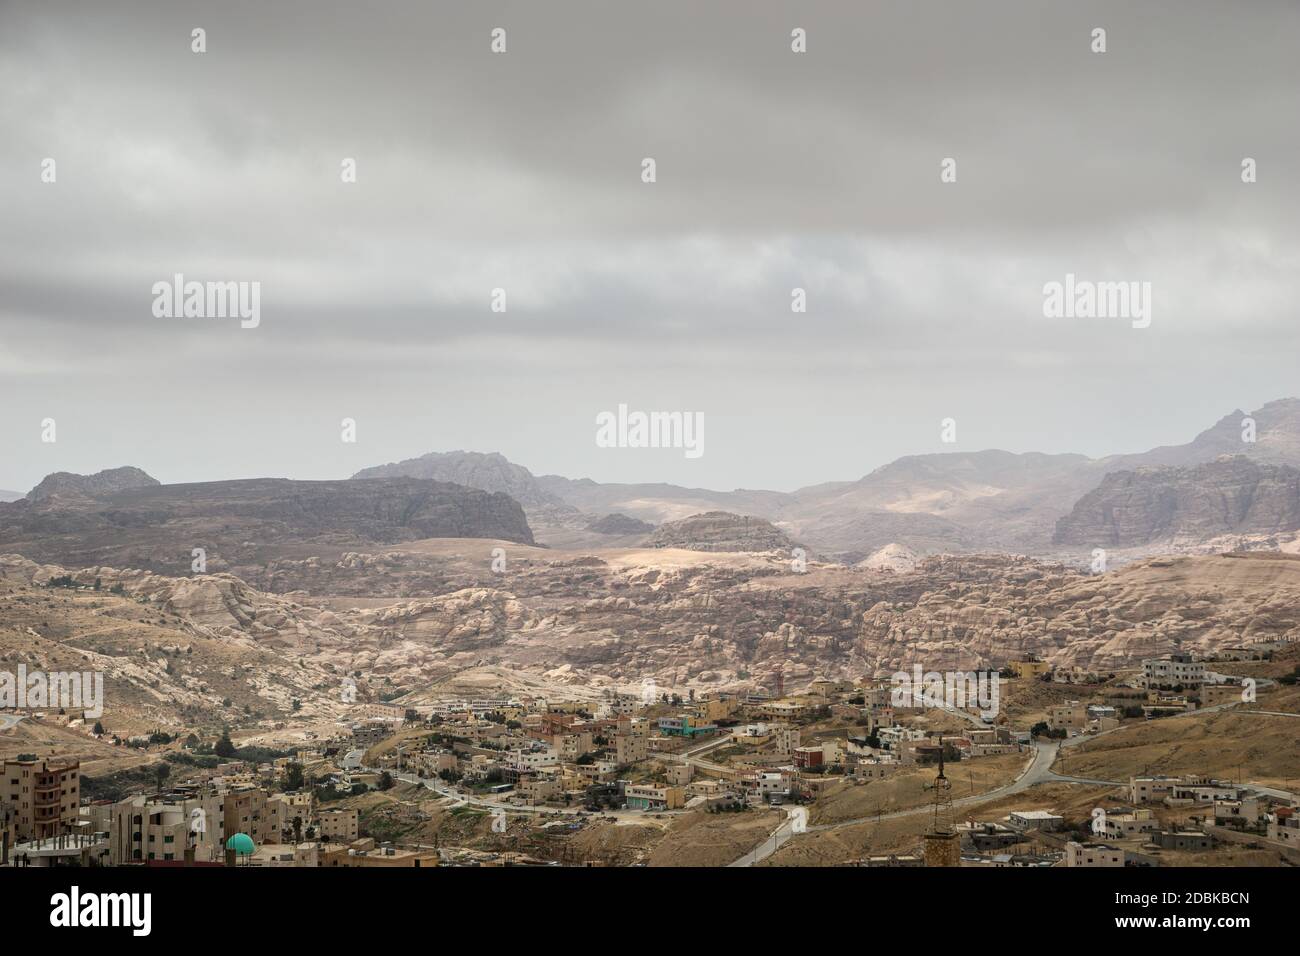 View over the City of Wadi Musa, Jordan Stock Photo